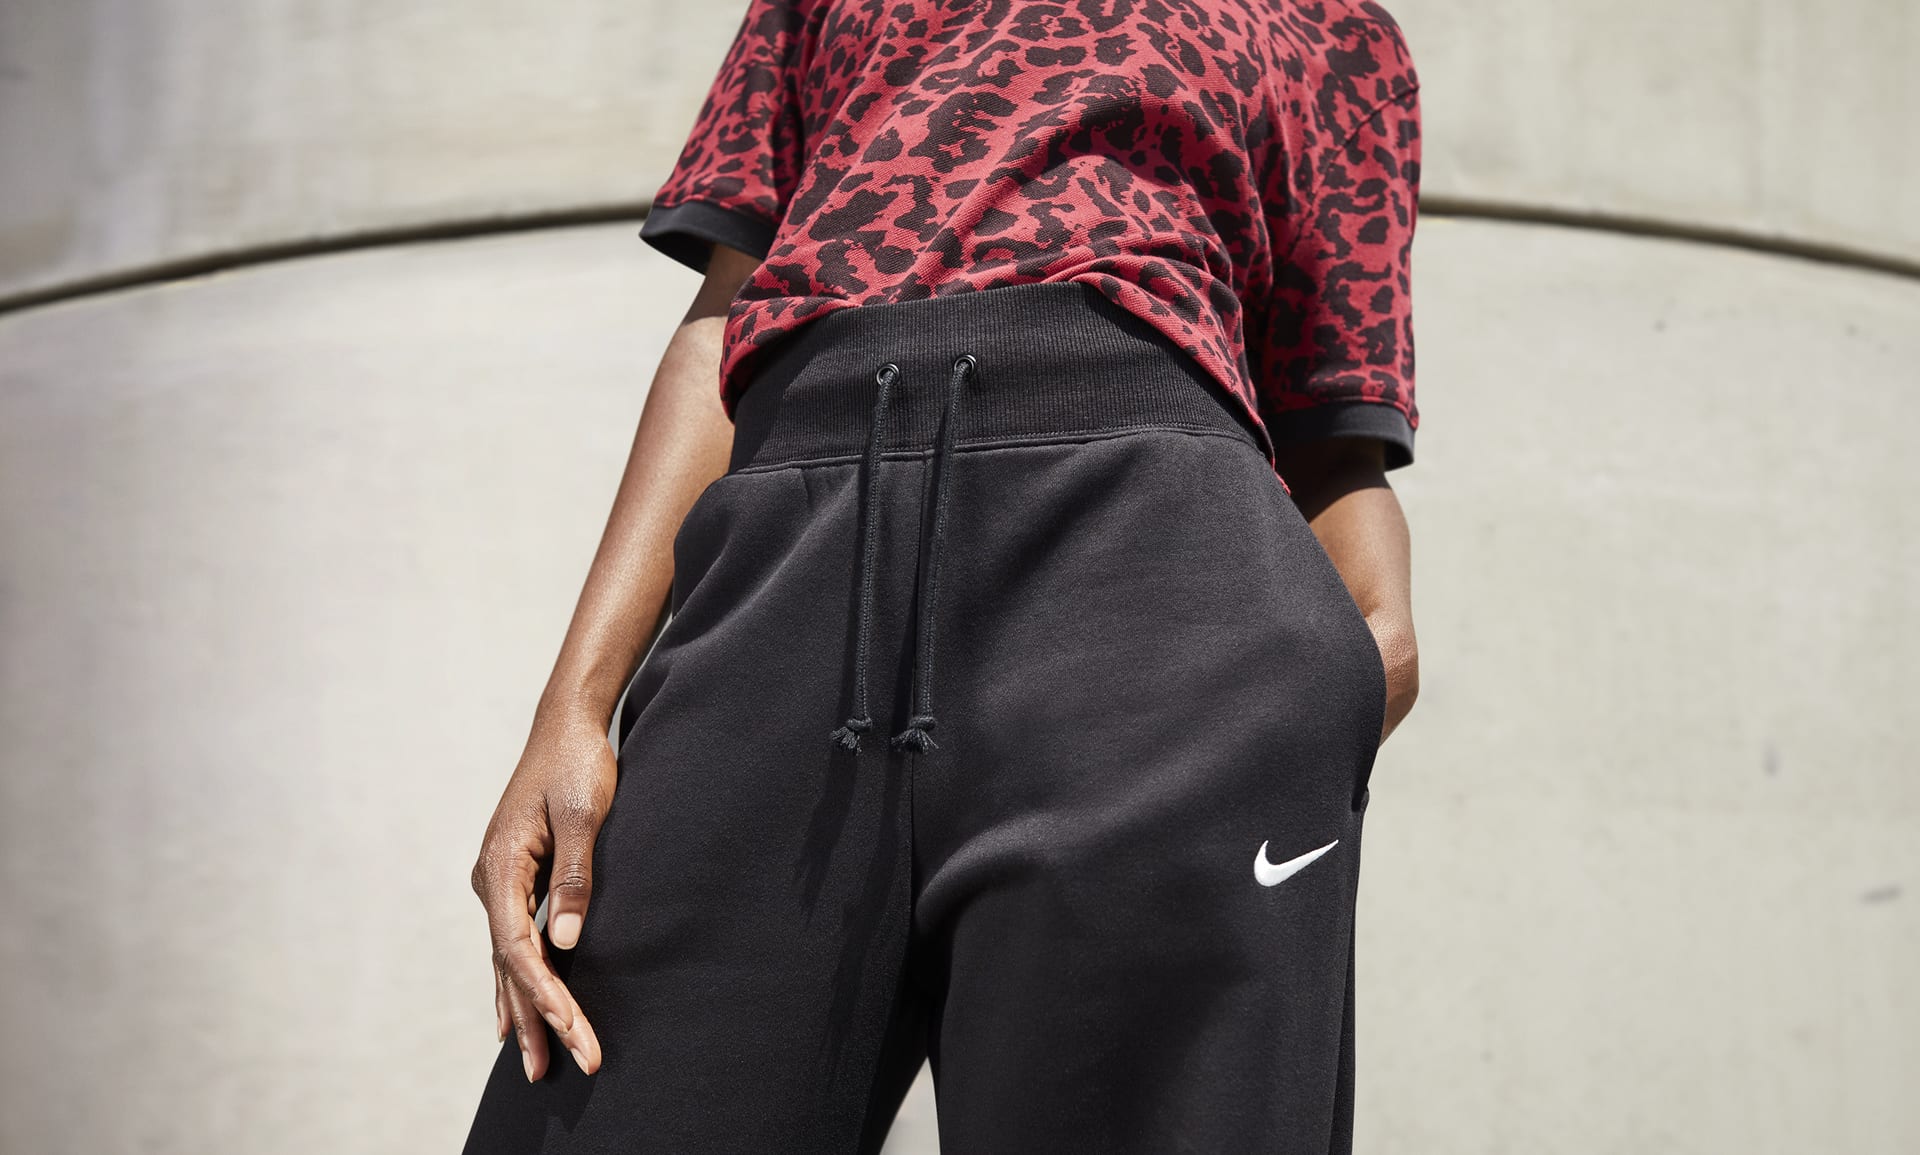 Nike Womens Pheonix High Rise Fleece Pants